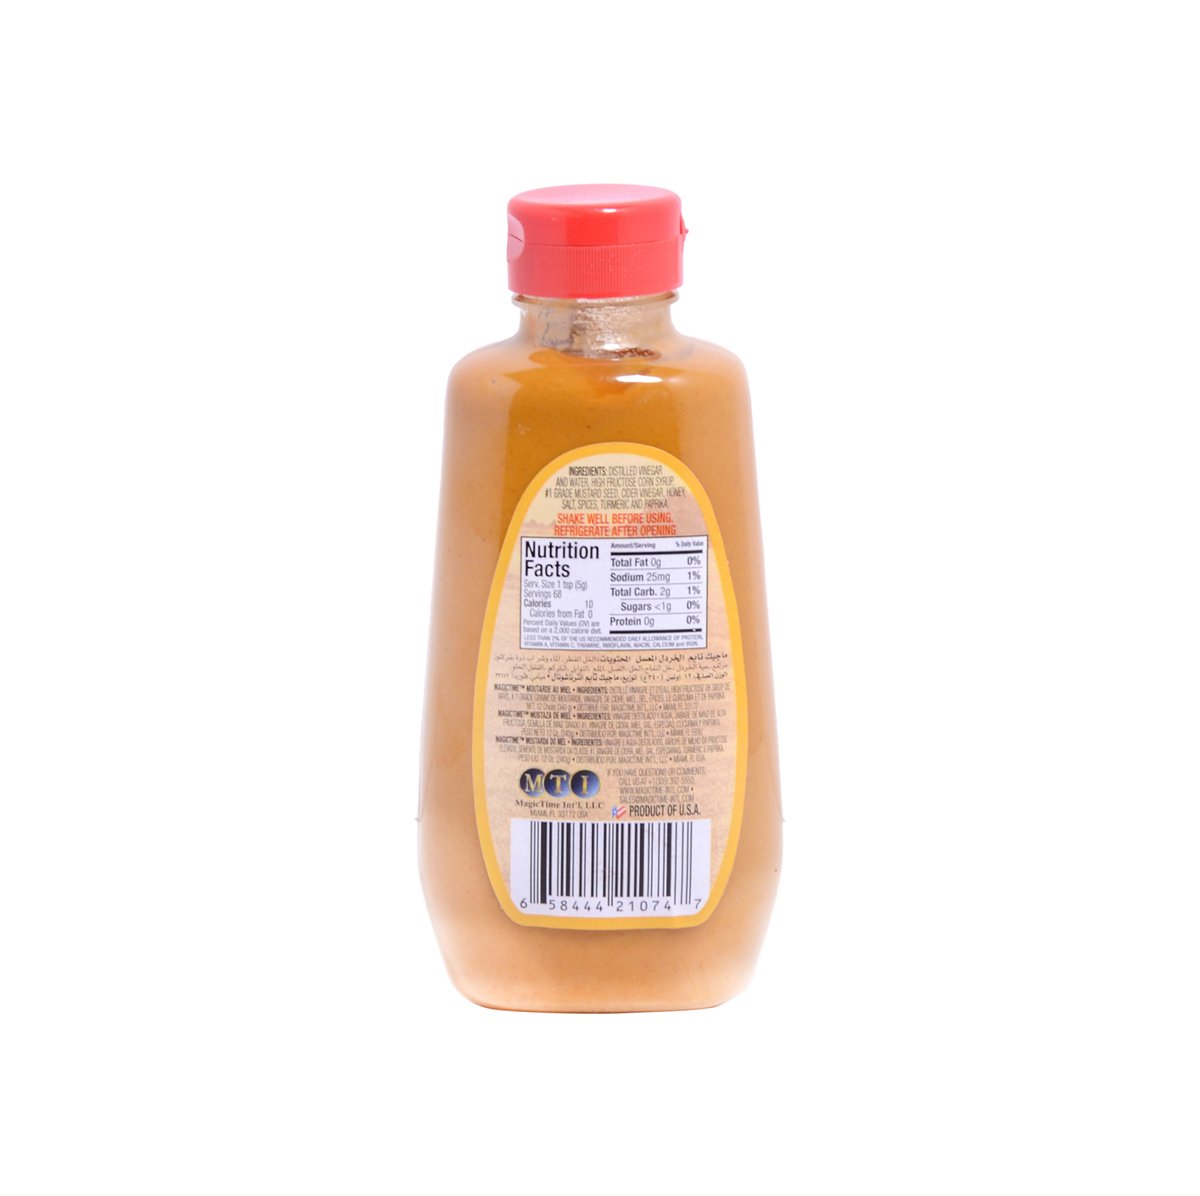 Magic Time Mustard Honey 340g